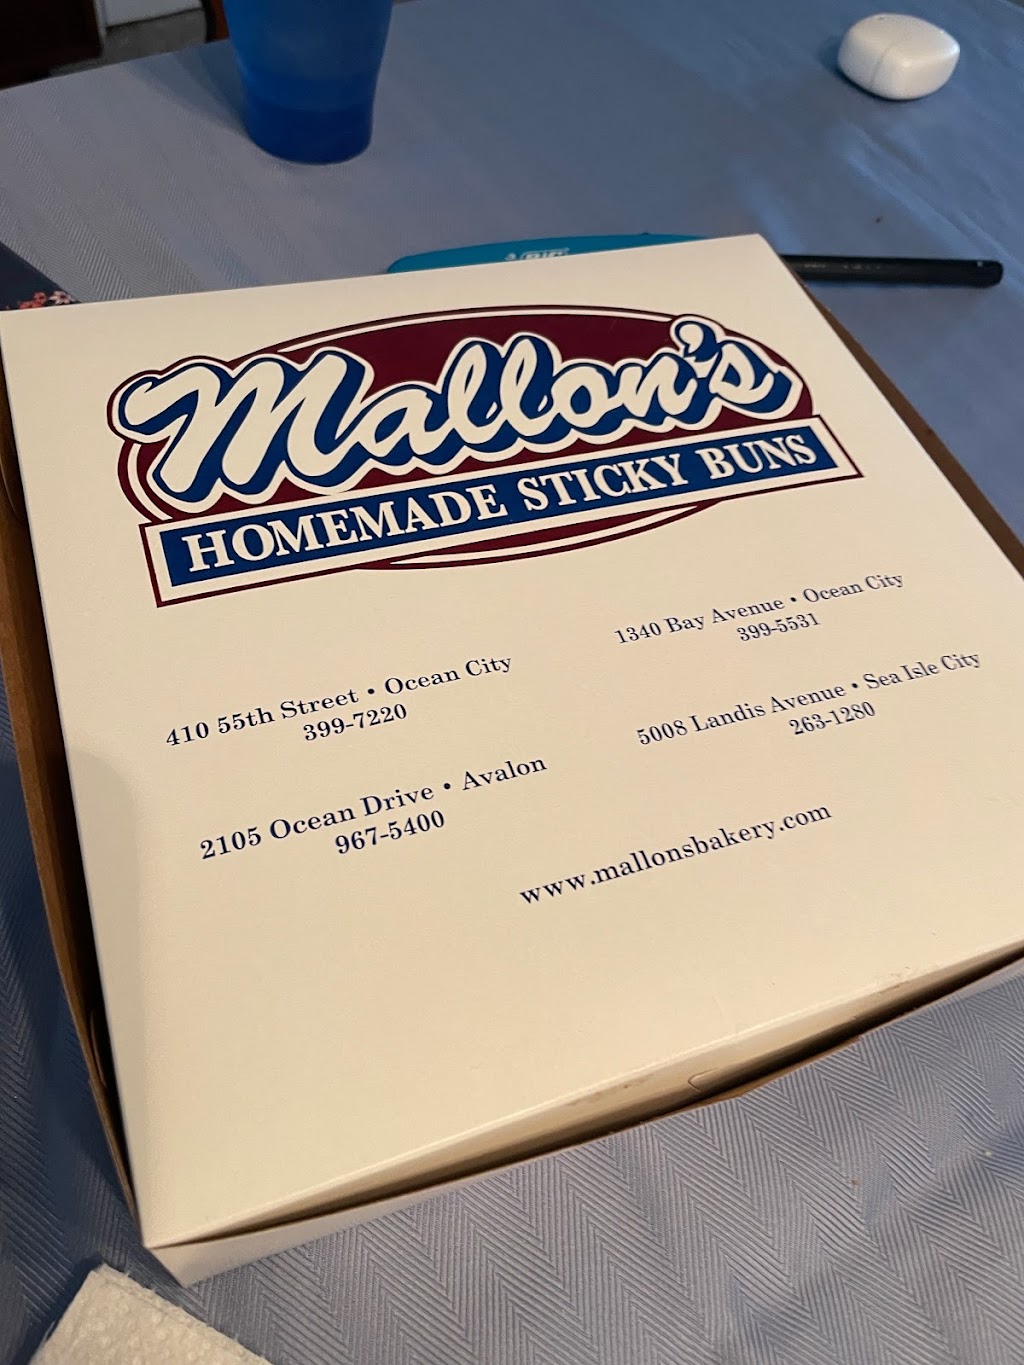 Mallons Homemade Sticky Buns | 410 E 55th St, Ocean City, NJ 08226 | Phone: (609) 399-7220